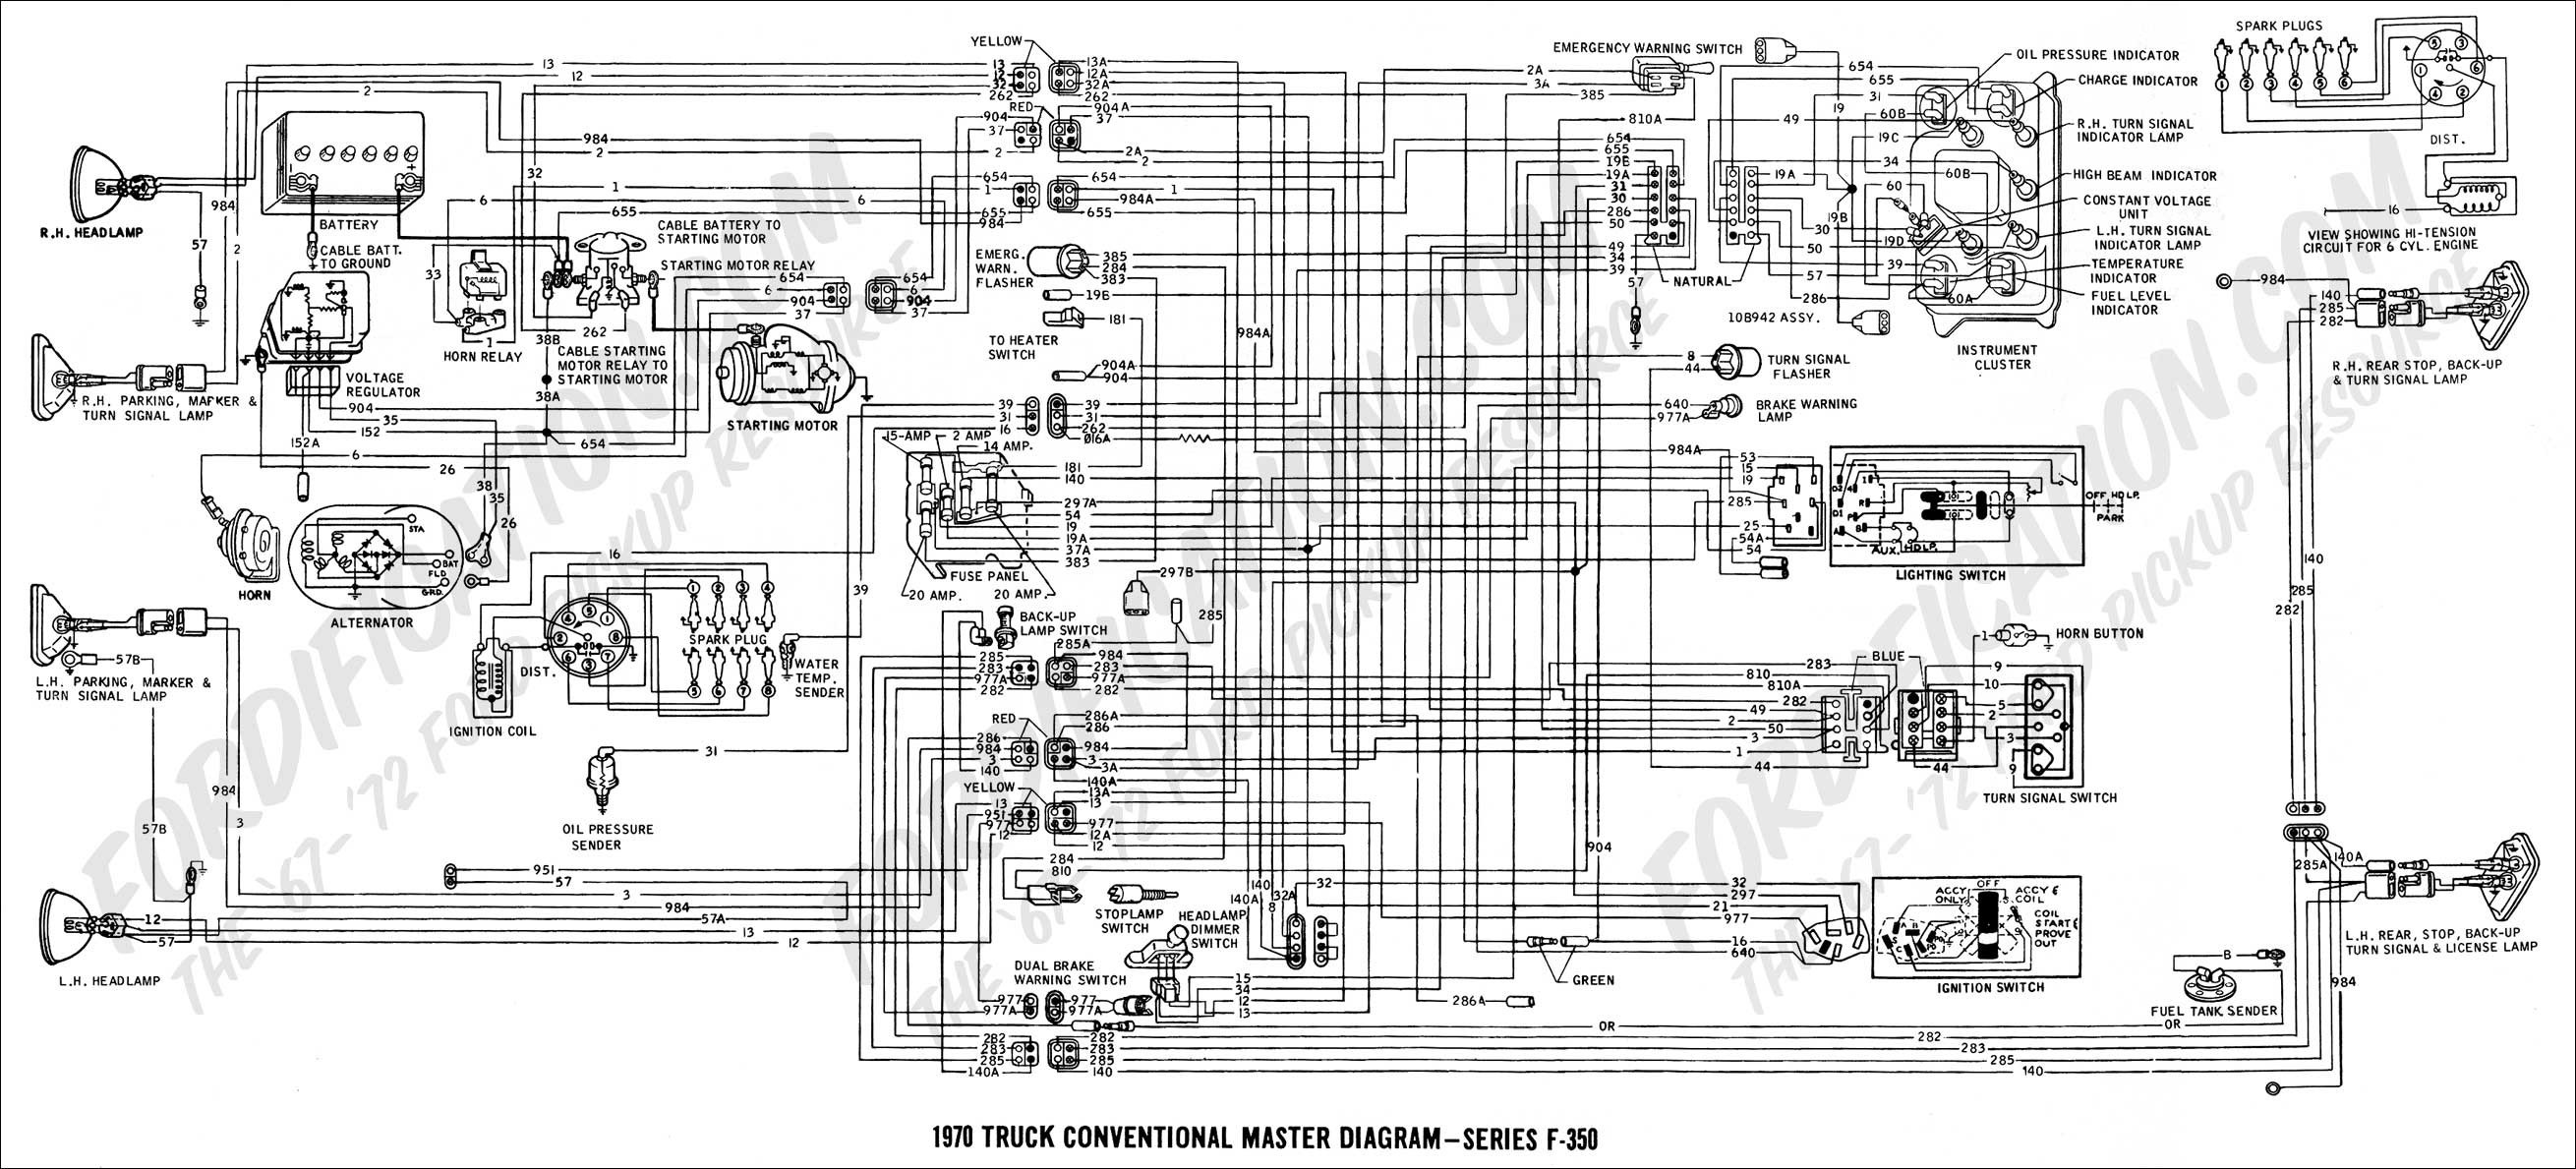 Ford Ranger Engine Diagram ford Ranger Parts Diagram Of Ford Ranger Engine Diagram